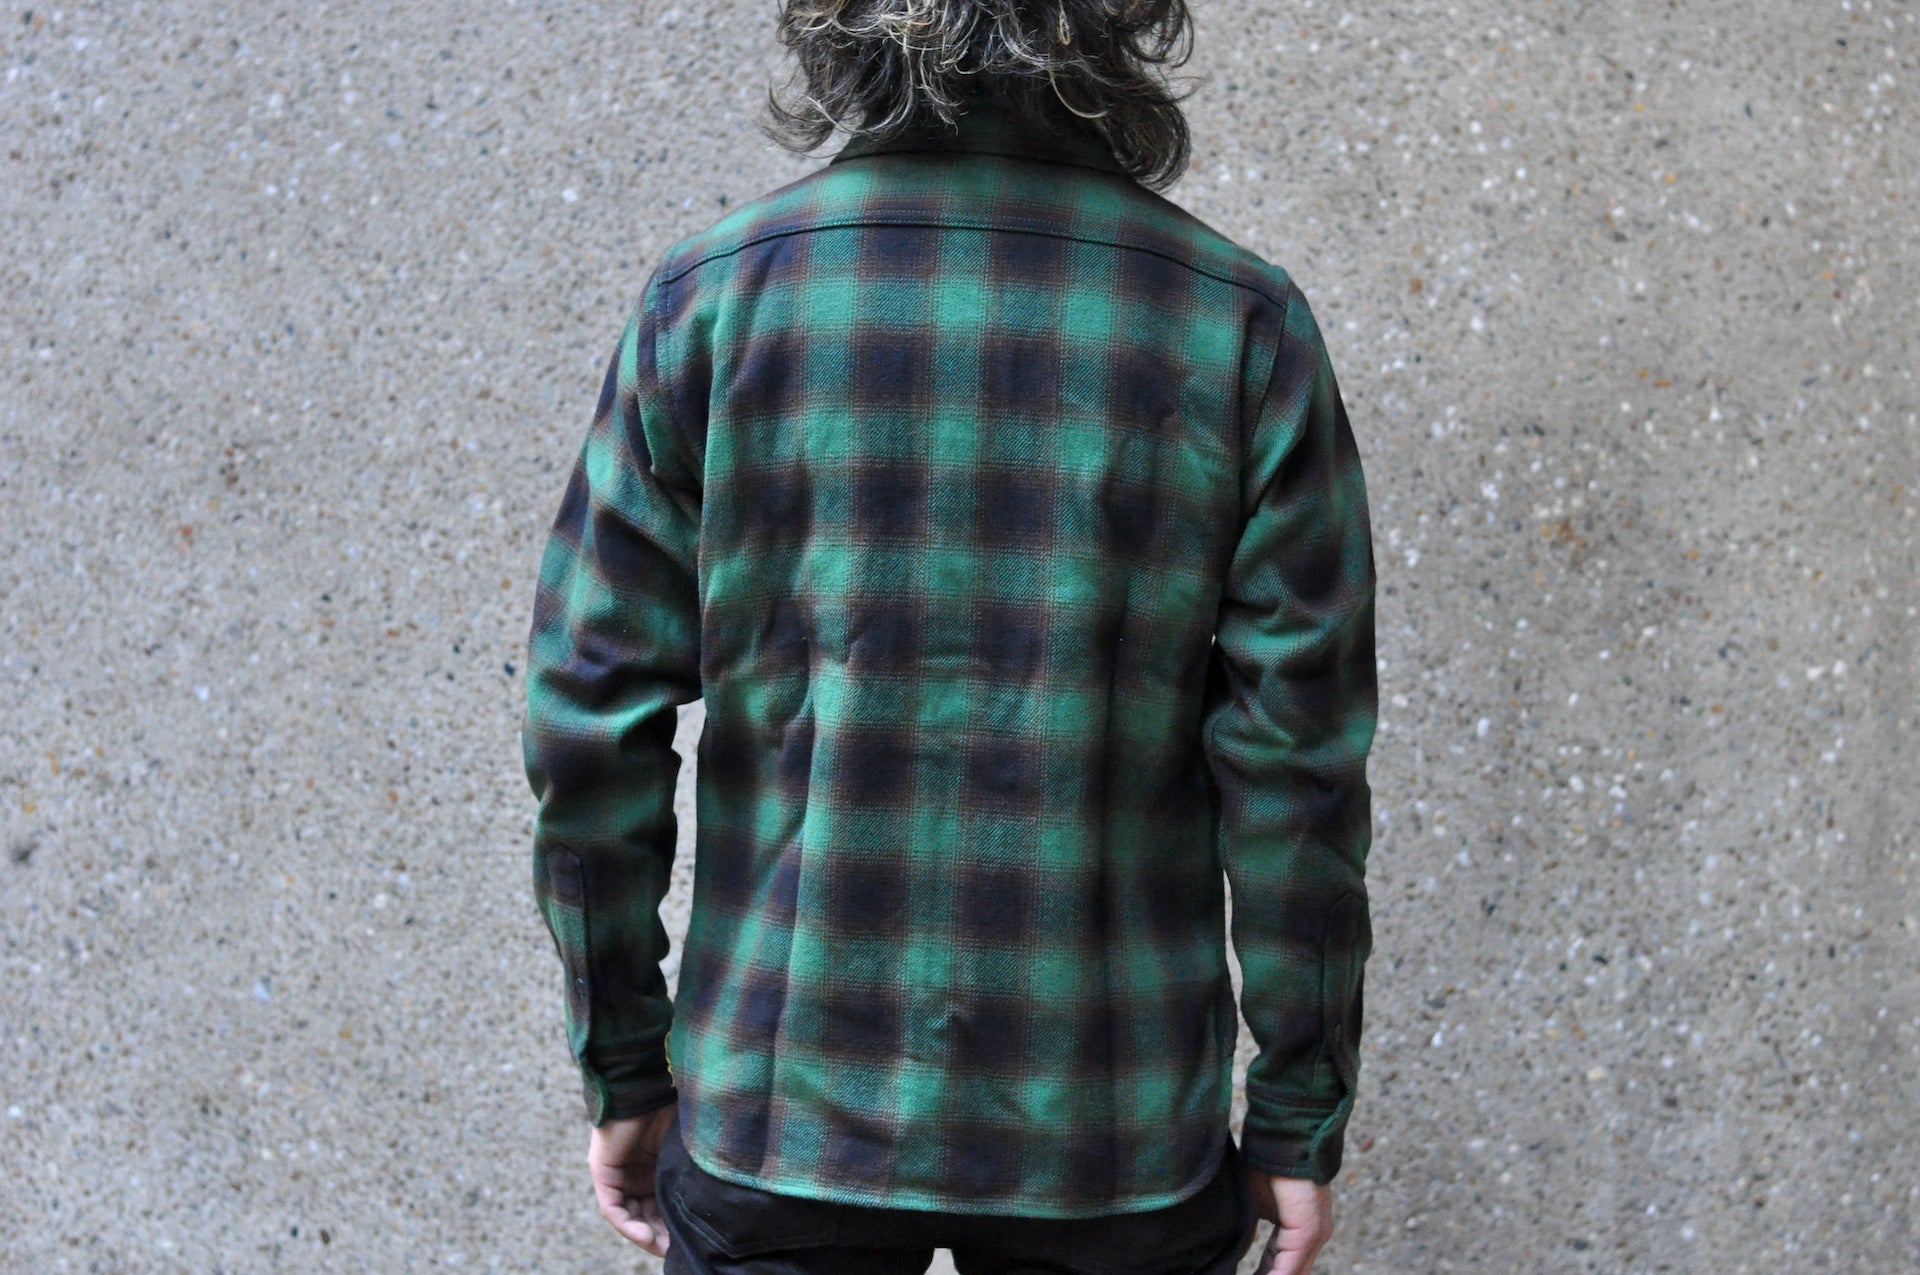 Iron Heart Ultra-Heavy Flannel Classic Check Work Shirt (Woodland Green)